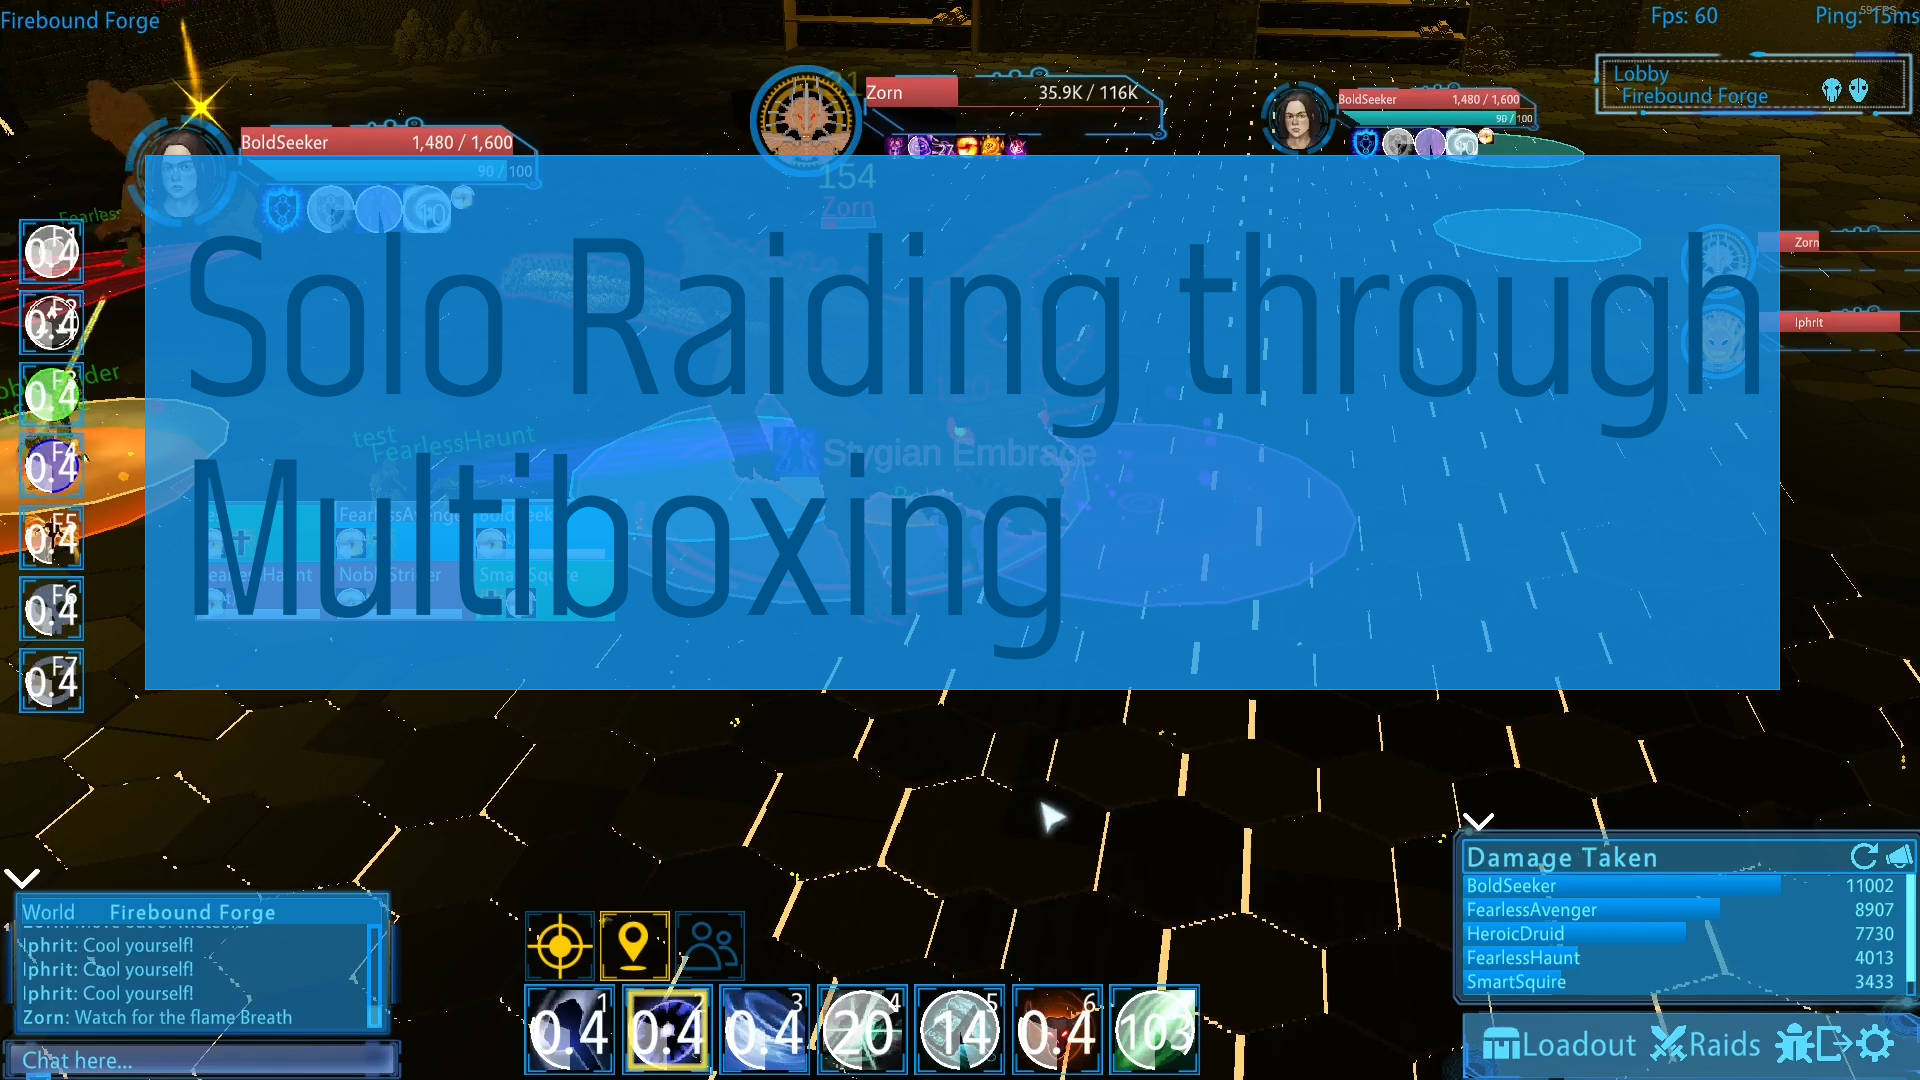 Solo Raiding through Multiboxing